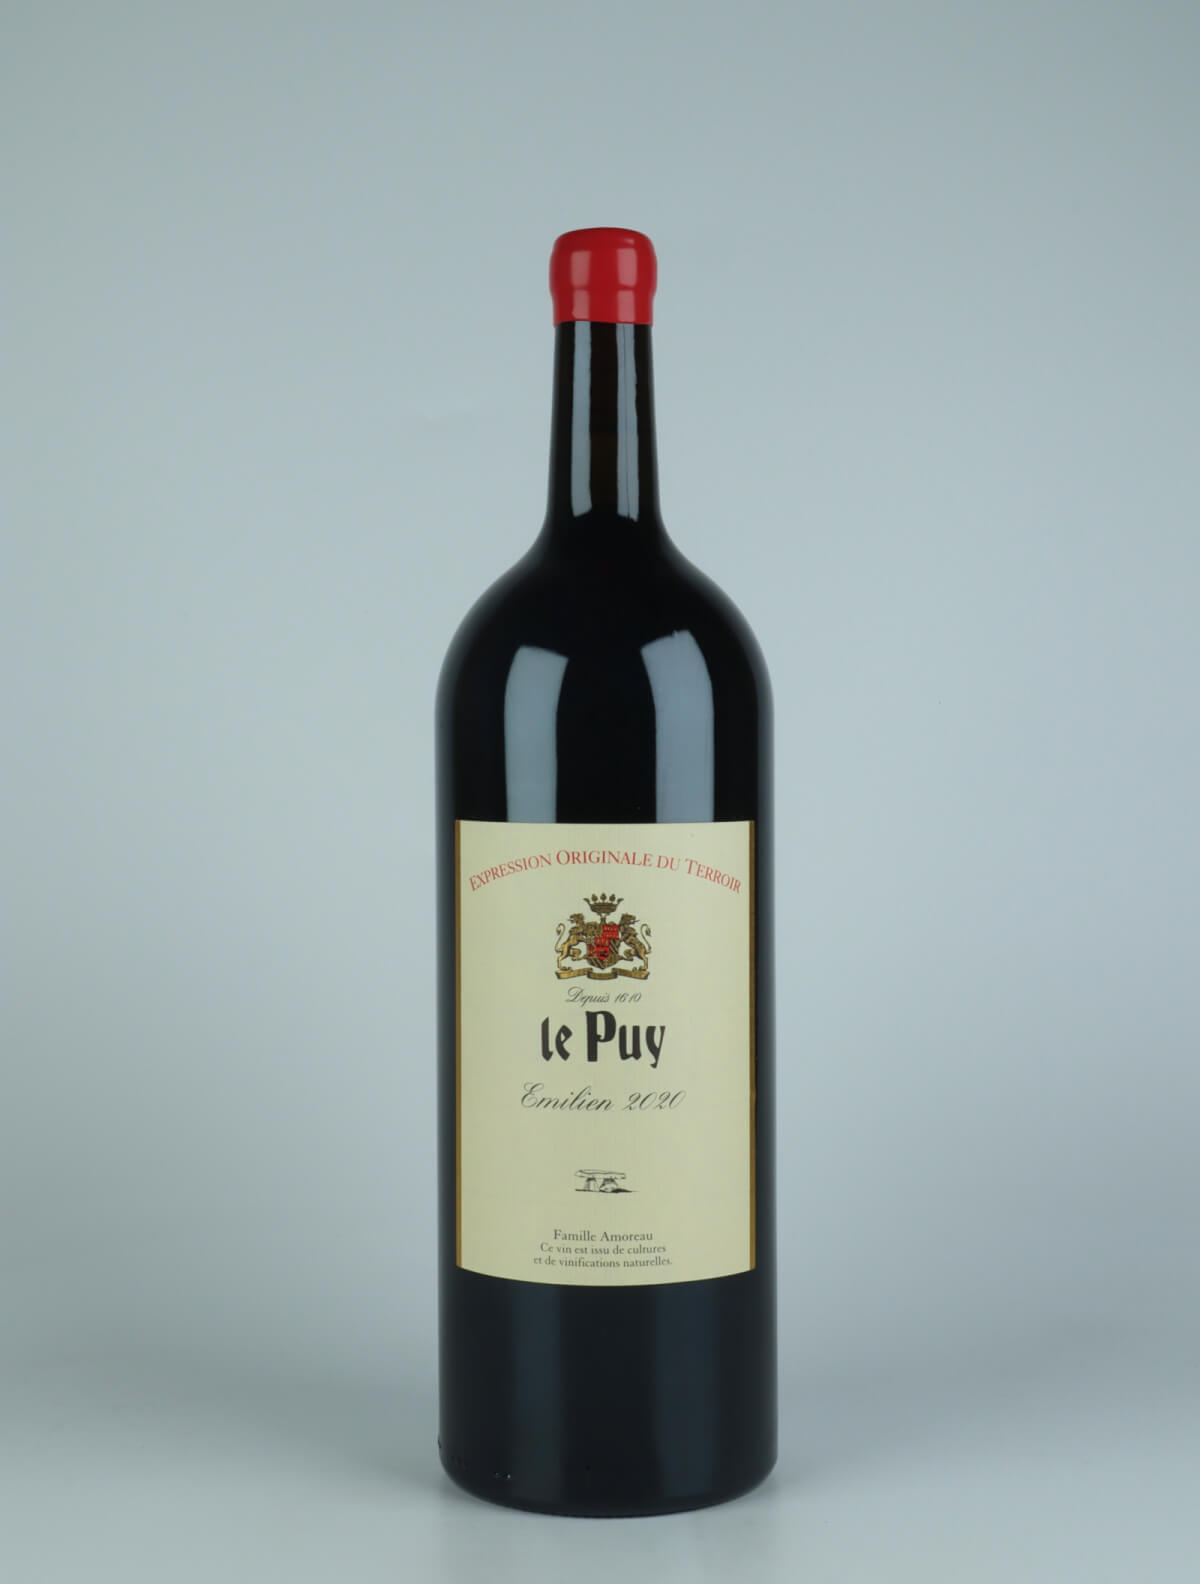 A bottle 2020 Emilien - Magnum Red wine from Château le Puy, Bordeaux in France